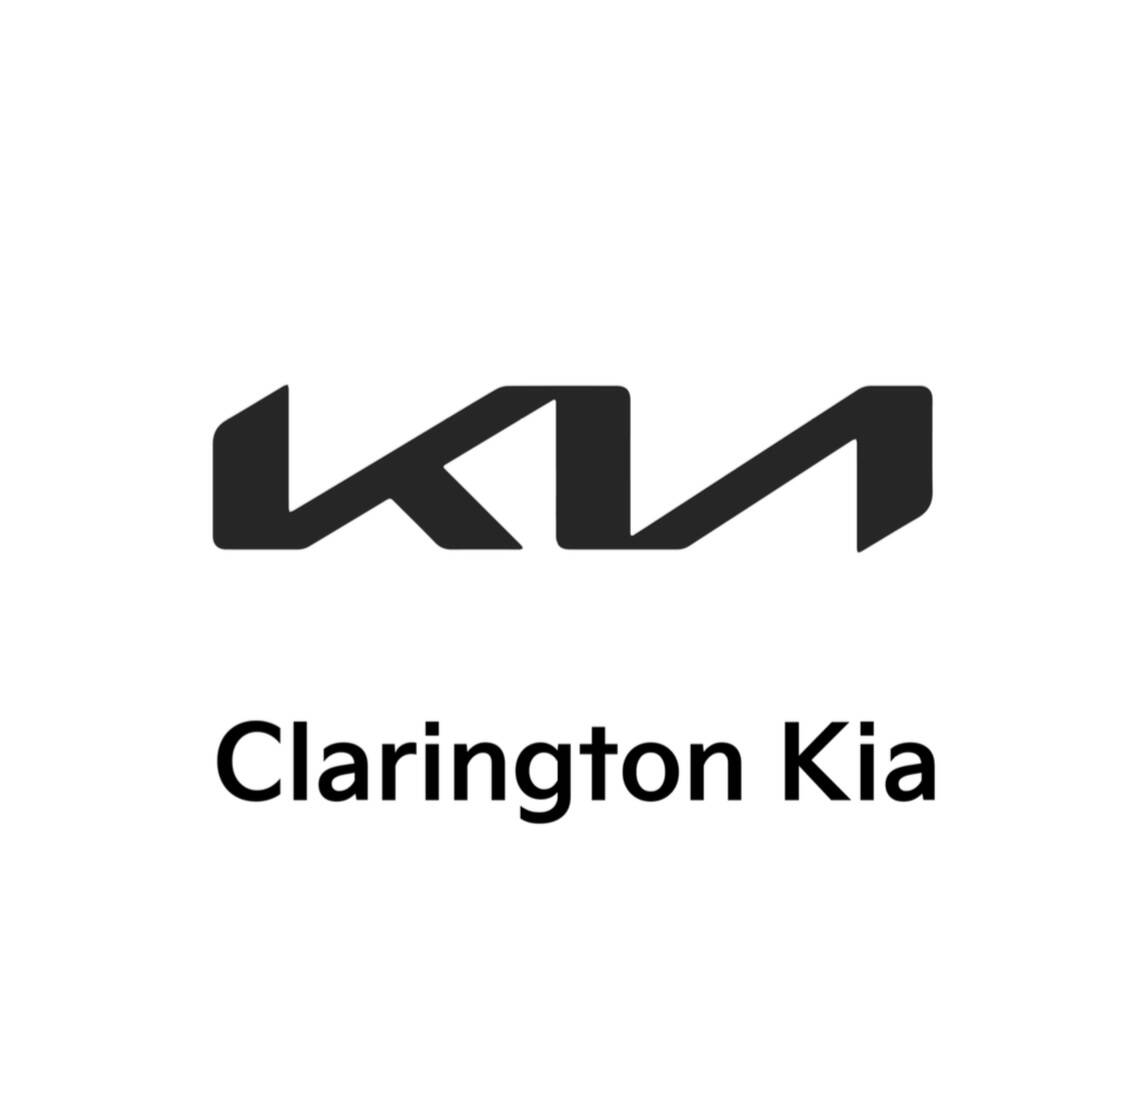 Clarington Kia